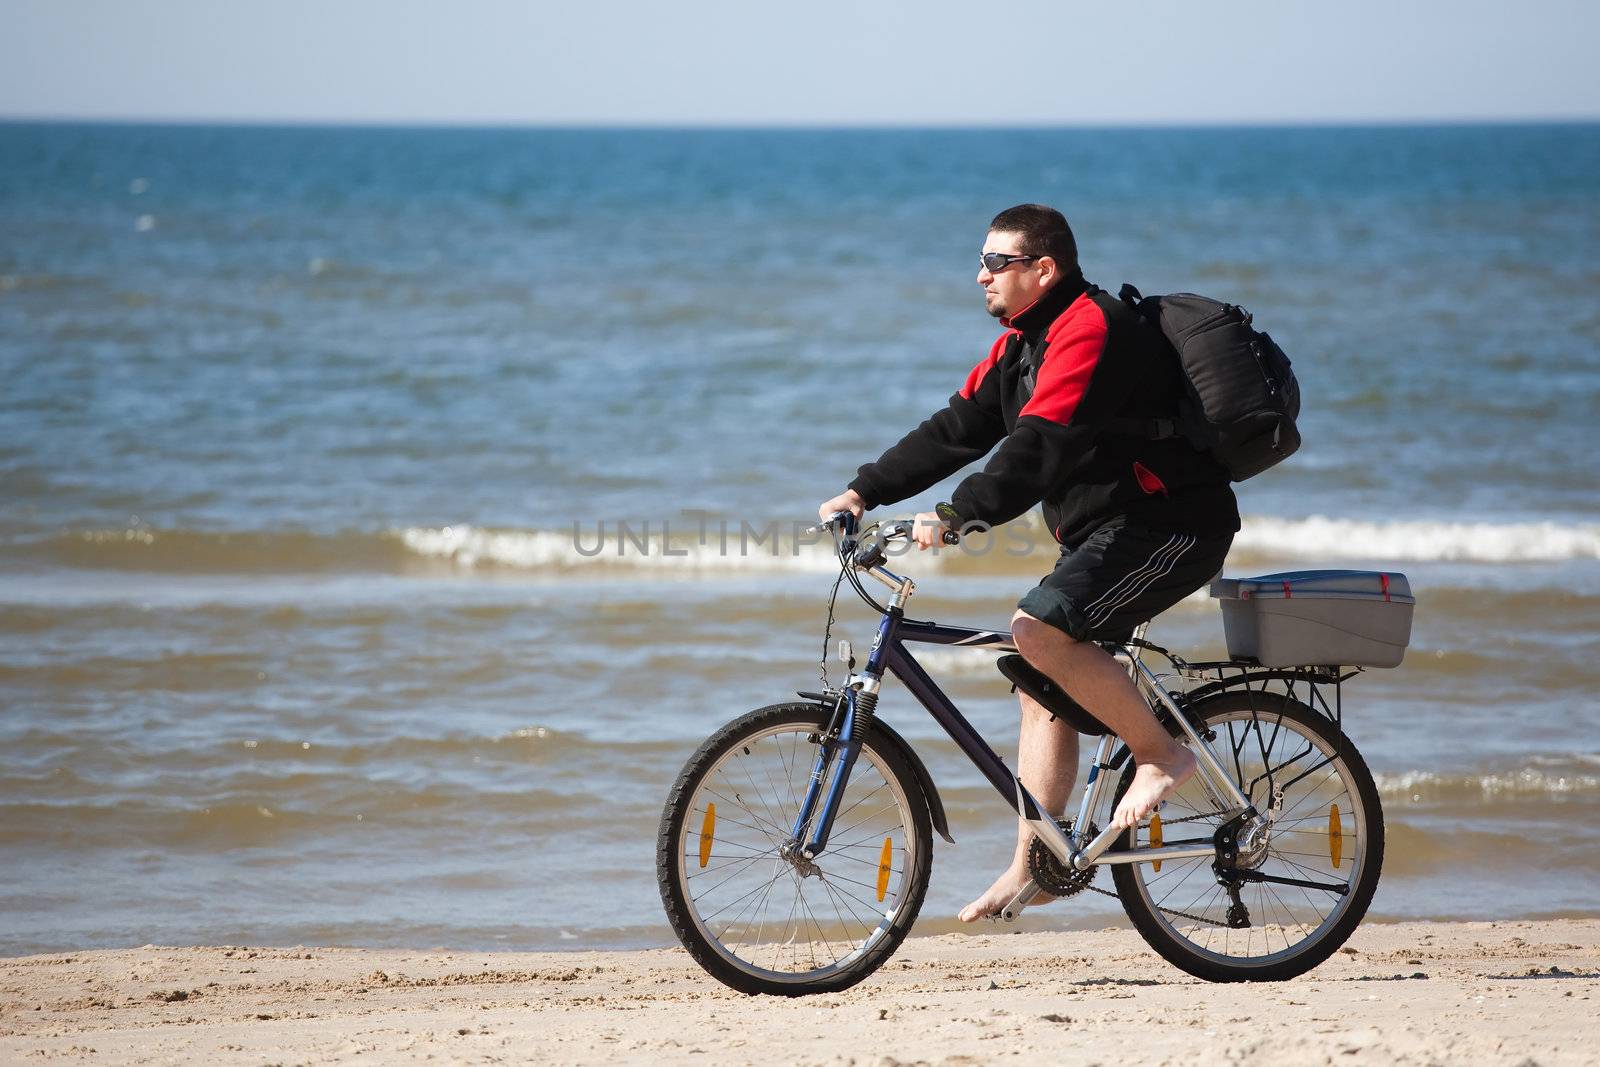 man riding mountain bike on the beach by furzyk73